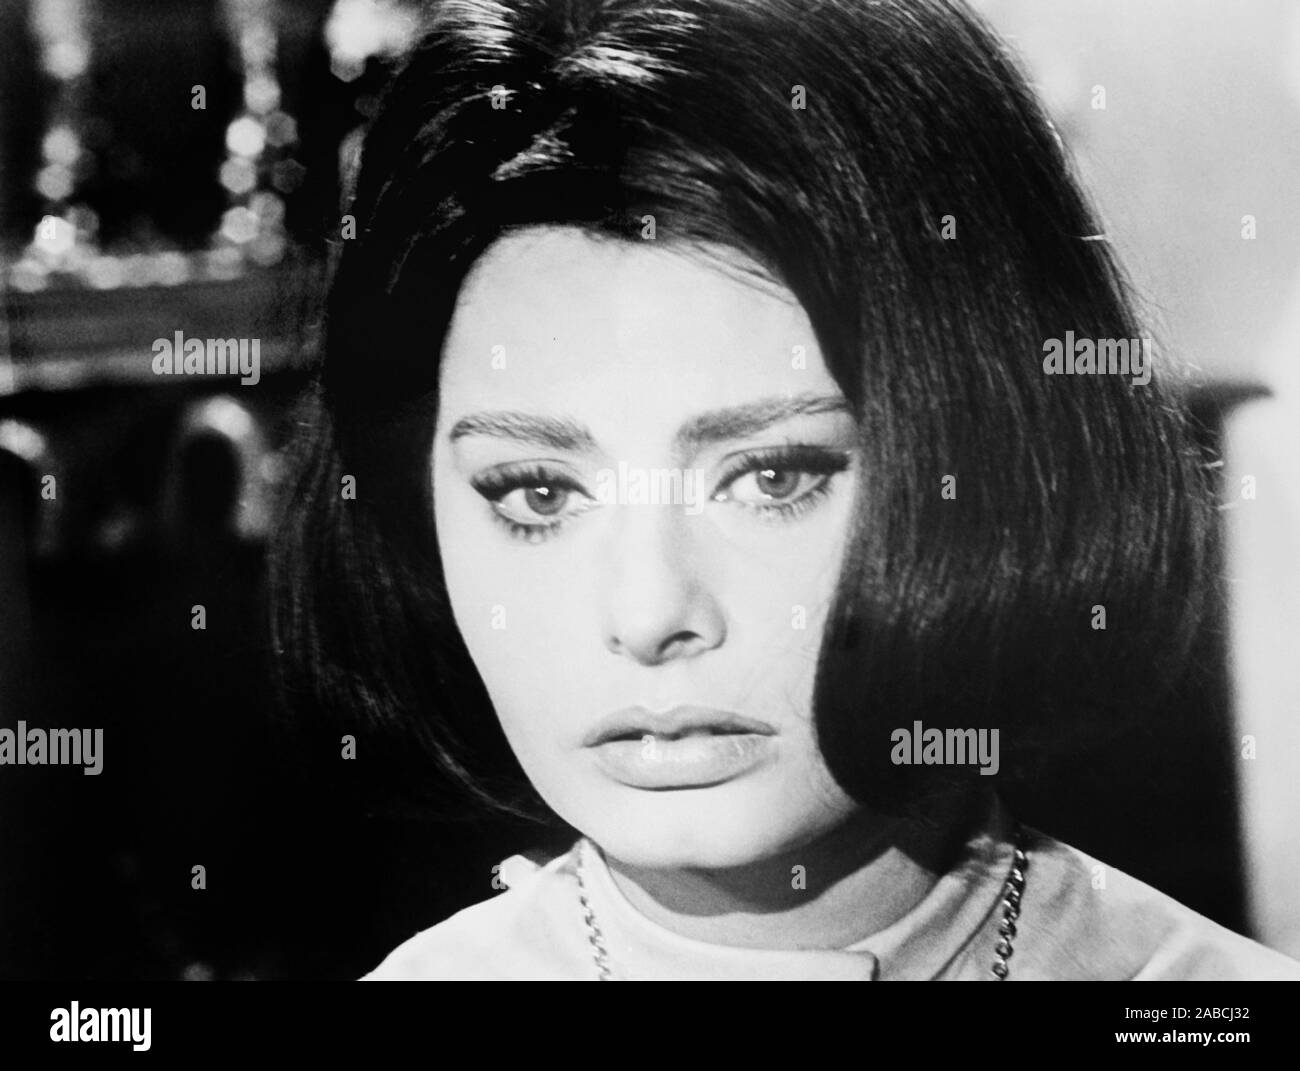 FIVE MILES TO MIDNIGHT, Sophia Loren, 1962 Stock Photo - Alamy